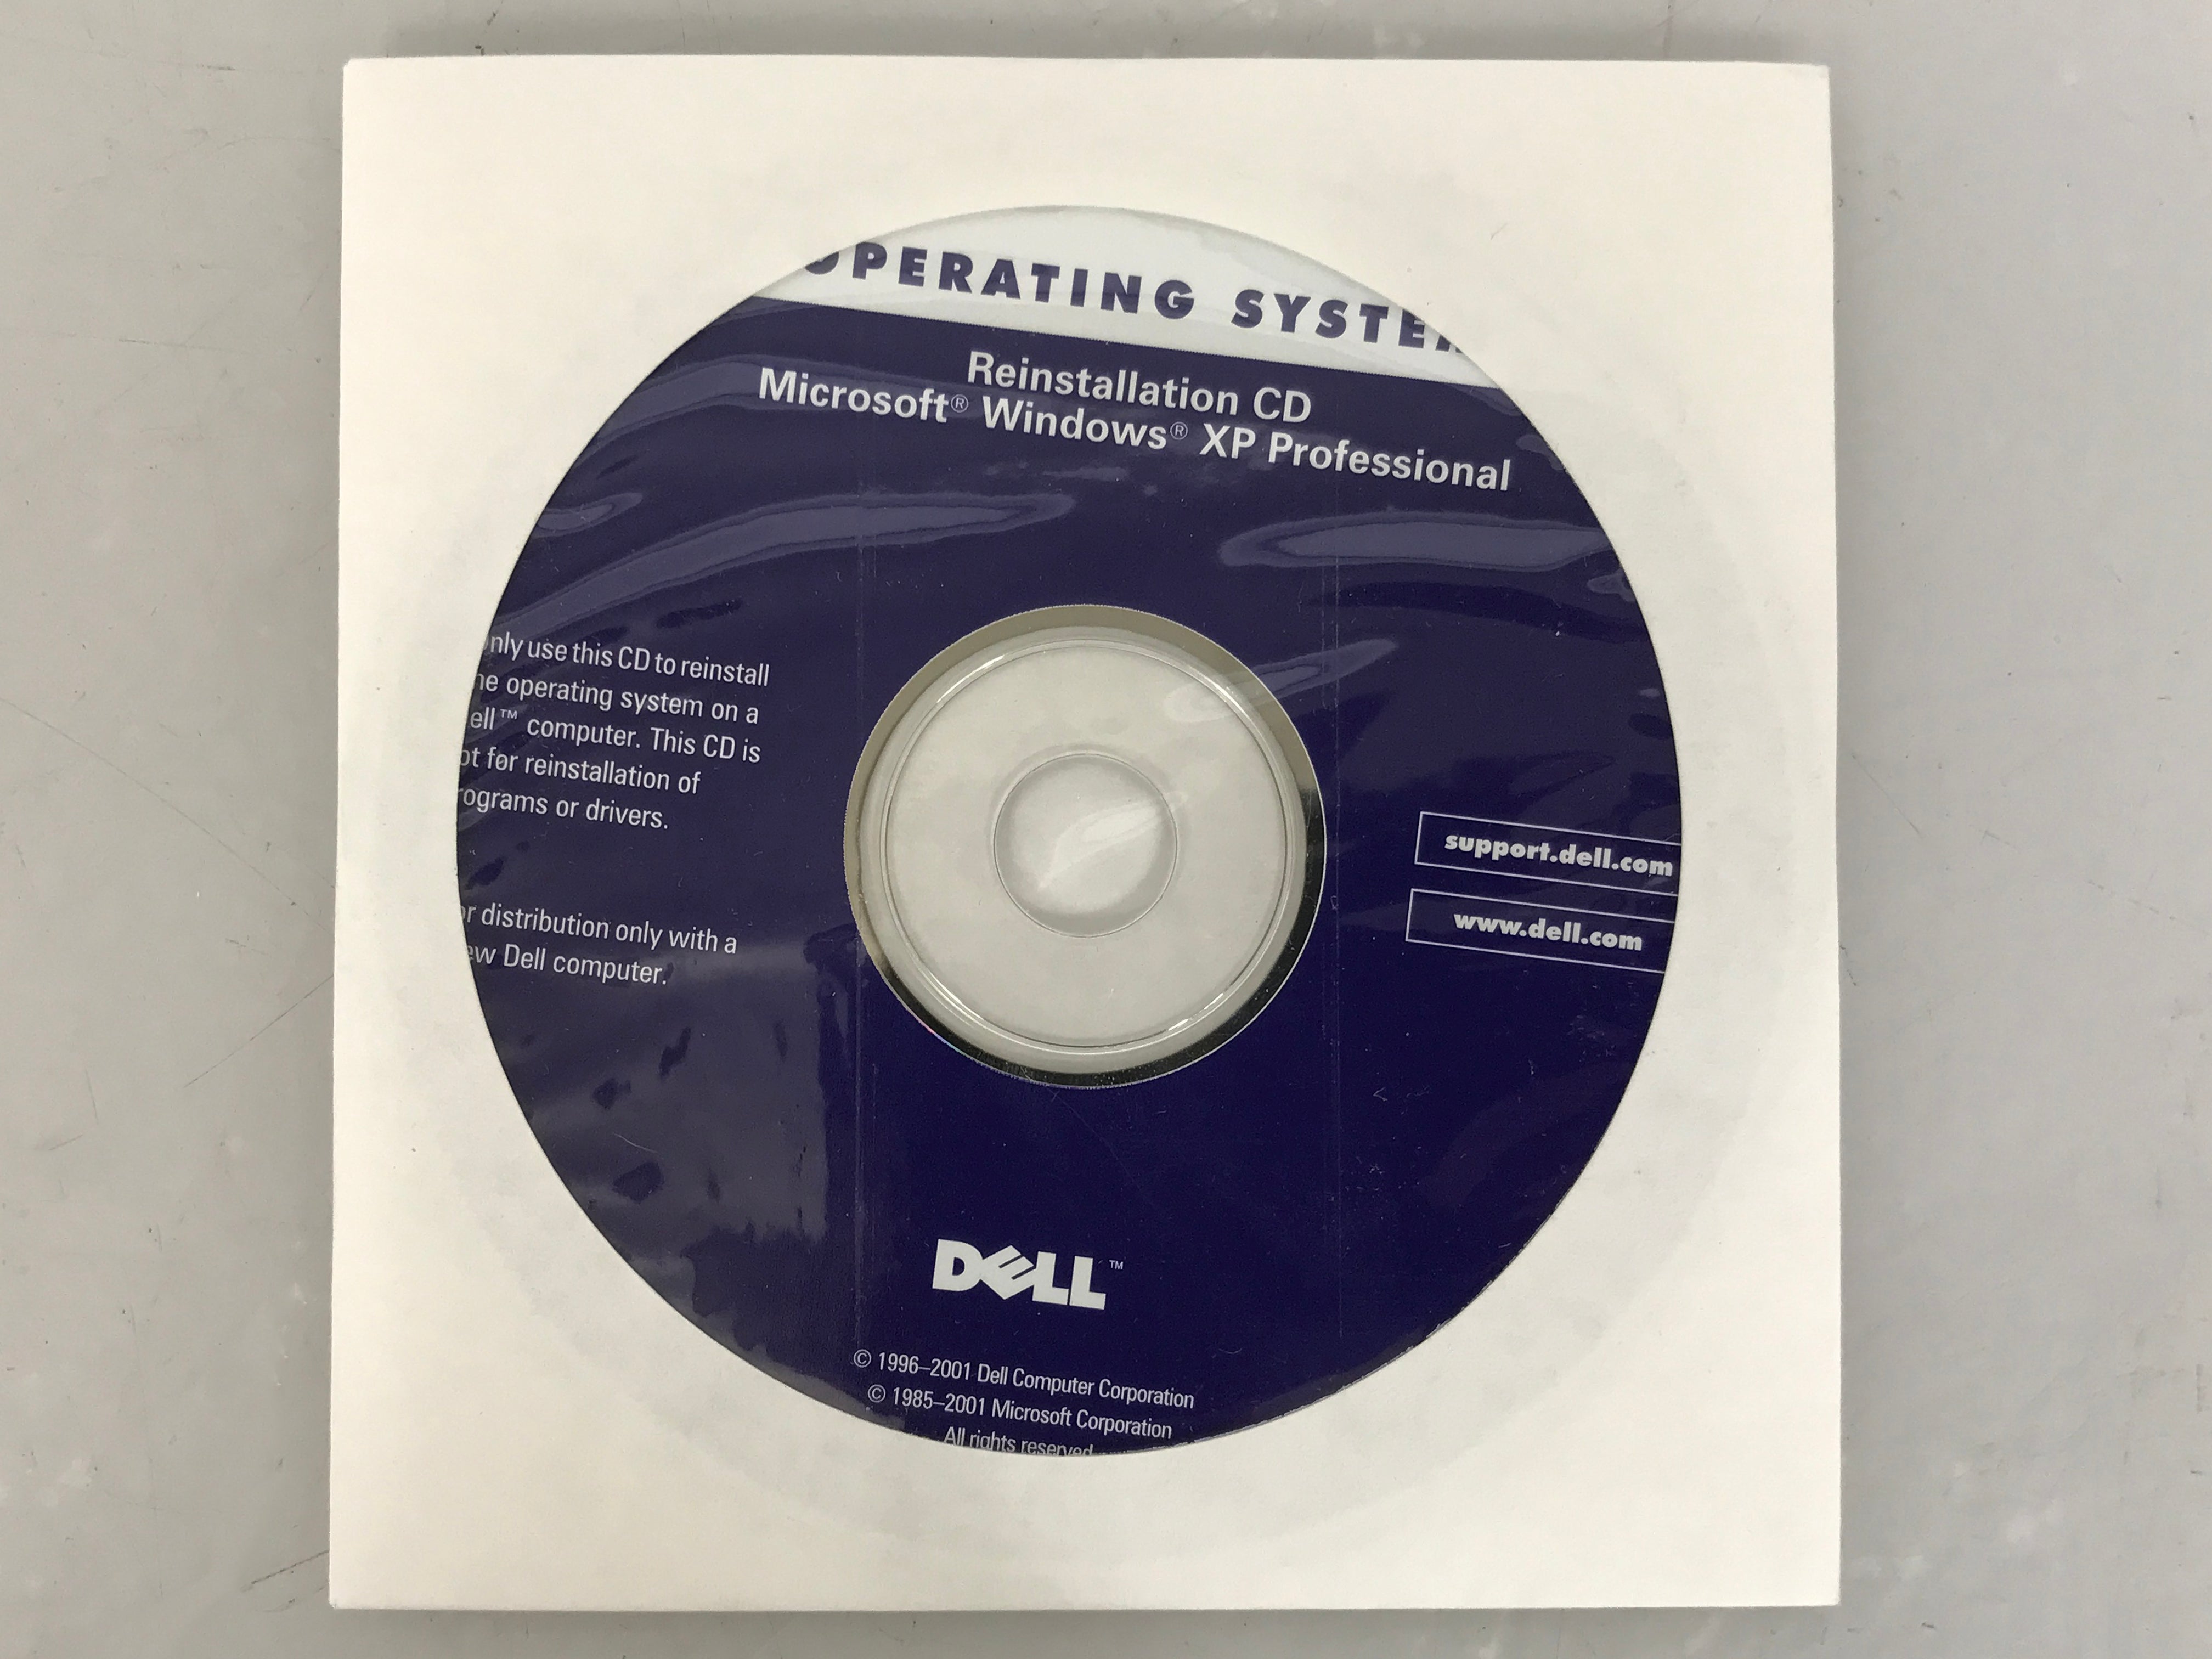 Microsoft Windows XP Professional Reinstallation CD Operating System Installation Disk